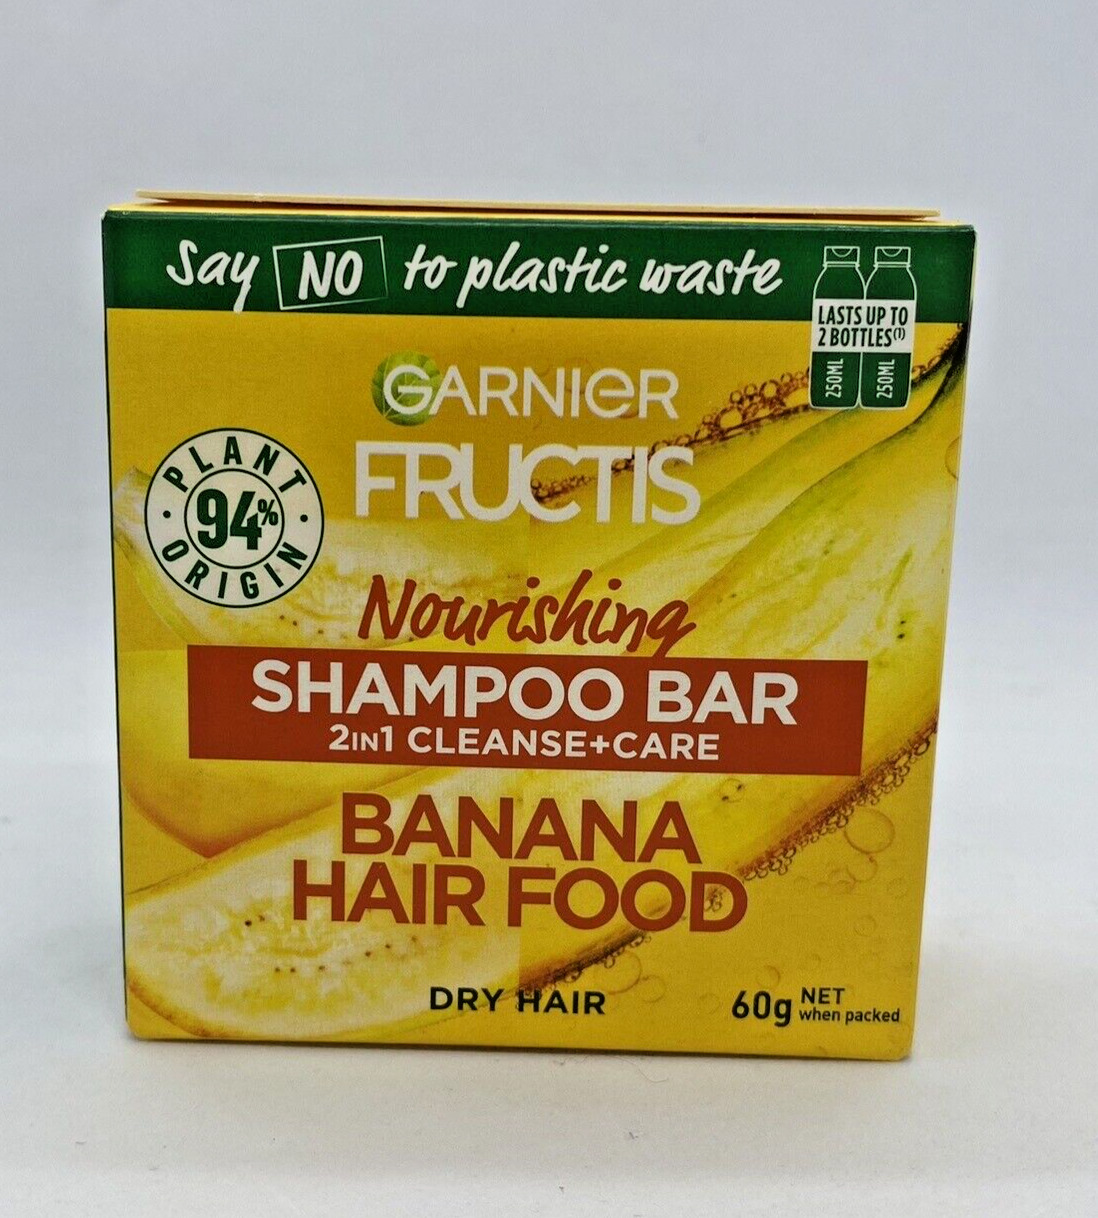 Garnier Fructis Banana Hair Food 2 In 1 Shampoo Bar Cleanse & Care Dry Hair 60g